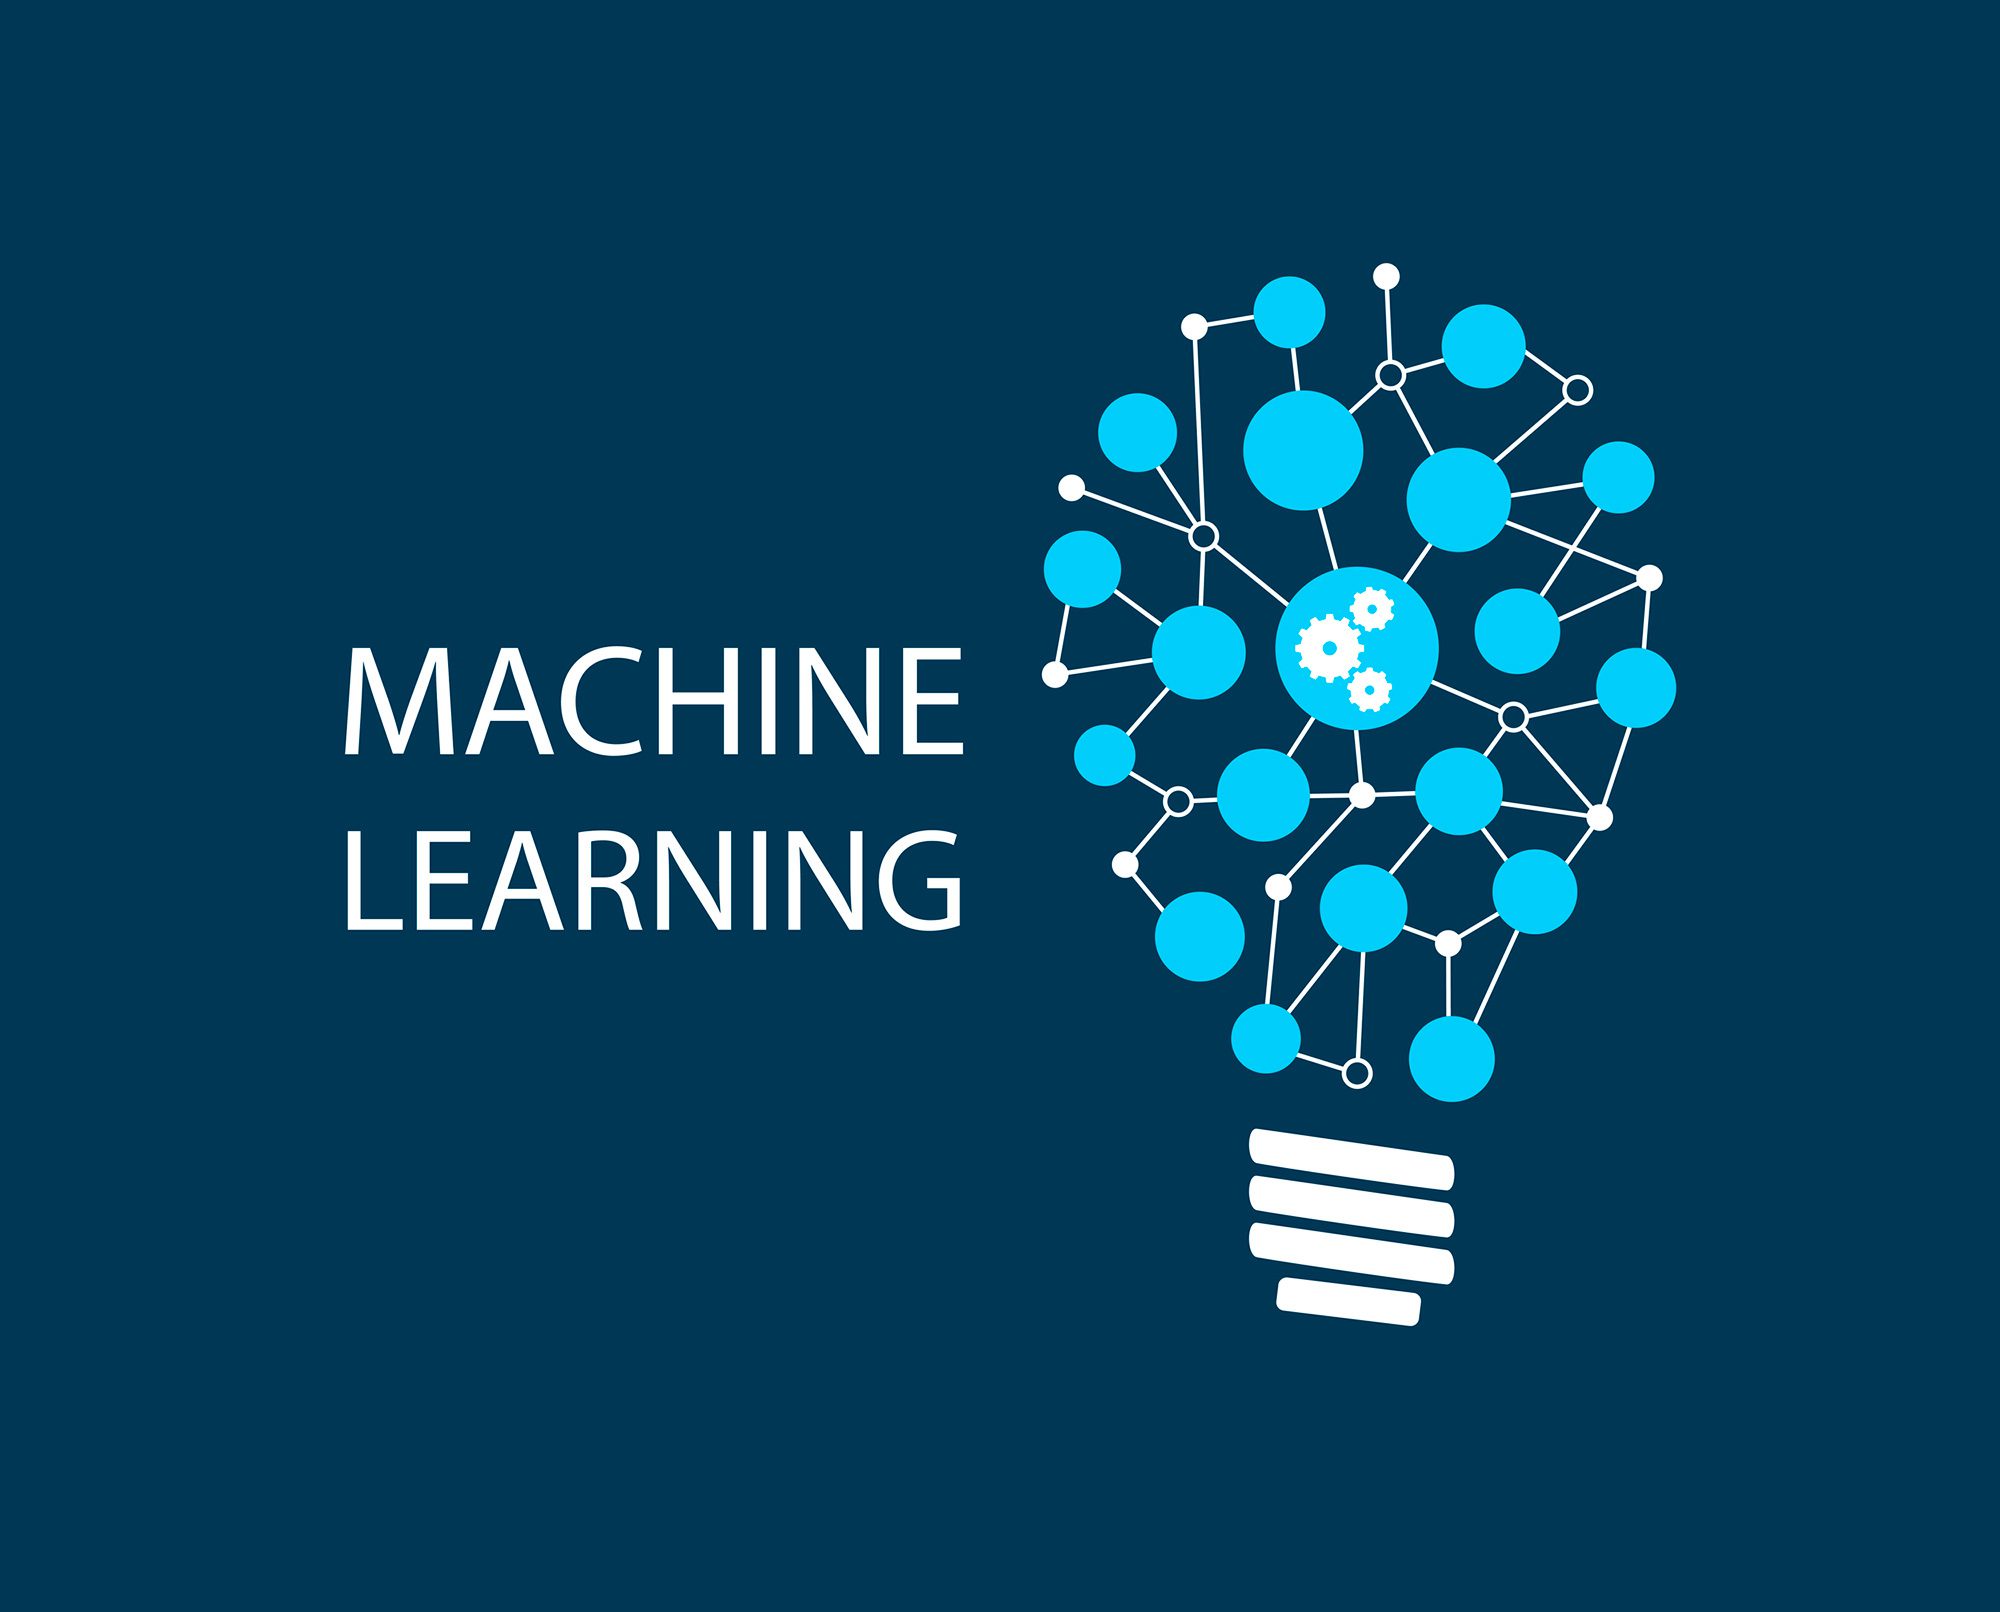 Multi learning. Машинное обучение. Machine Learning course. Machine Learning logo.